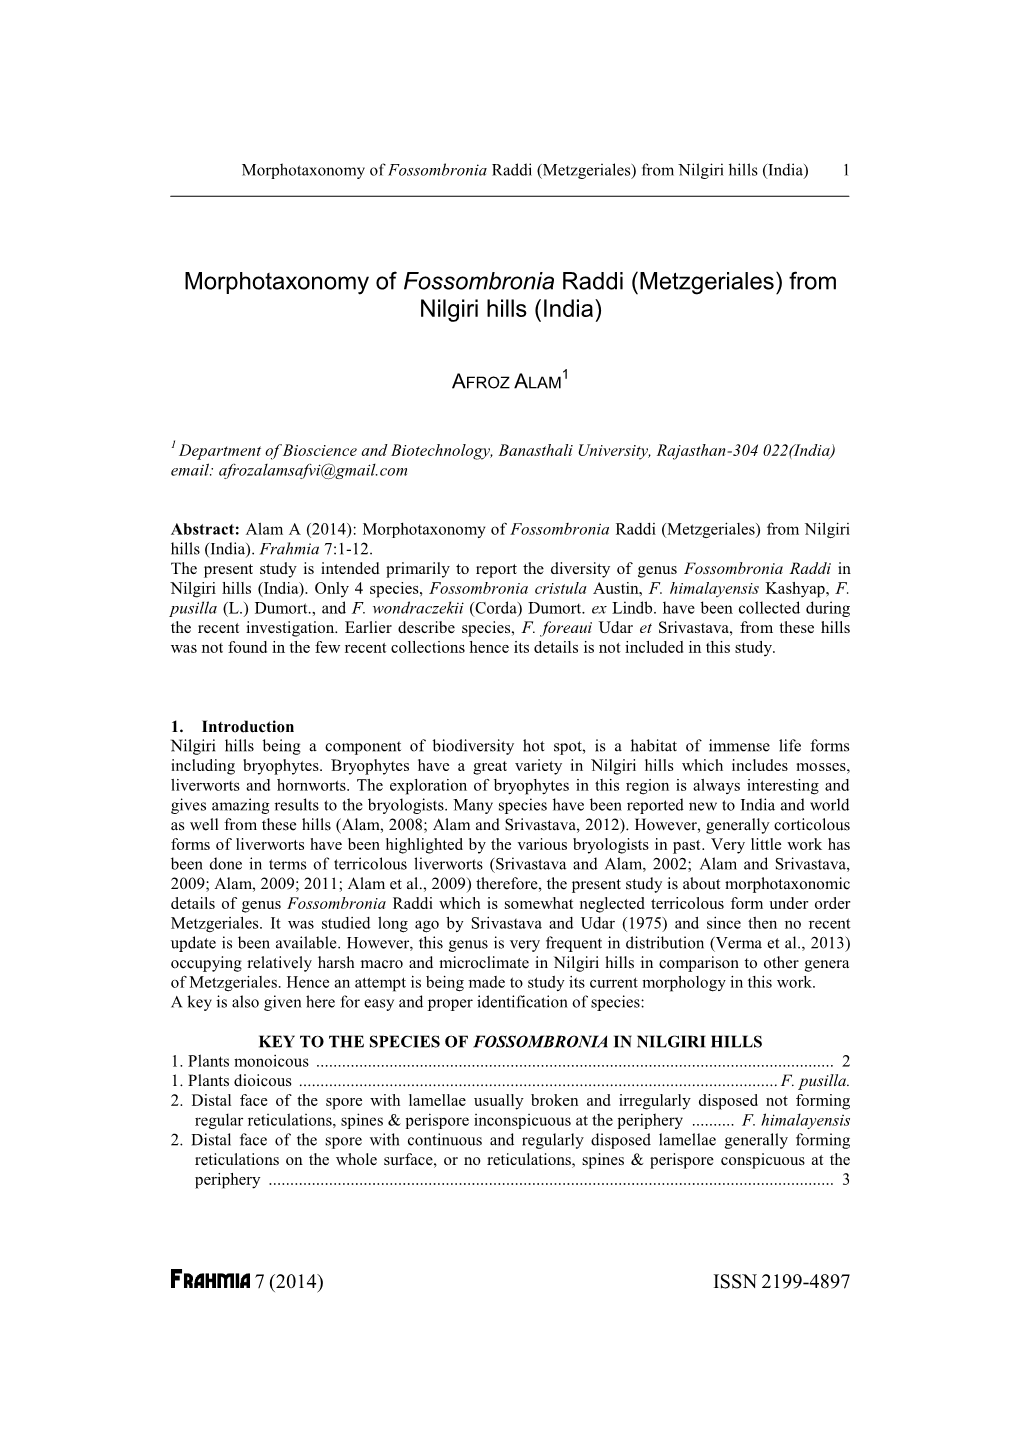 Morphotaxonomy of Fossombronia Raddi (Metzgeriales) from Nilgiri Hills (India) 1